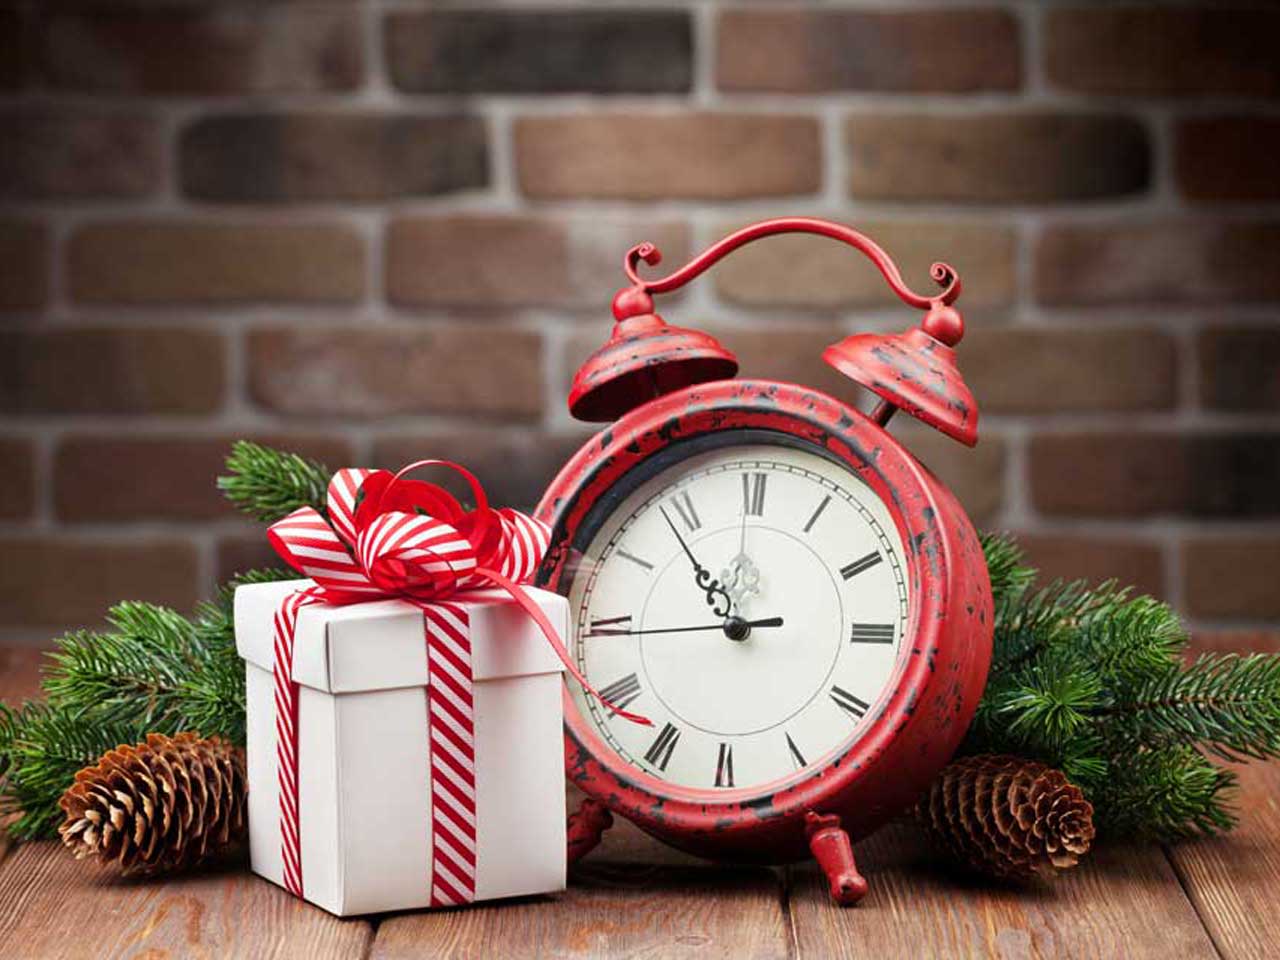 Save money by planning Christmas early - Saga